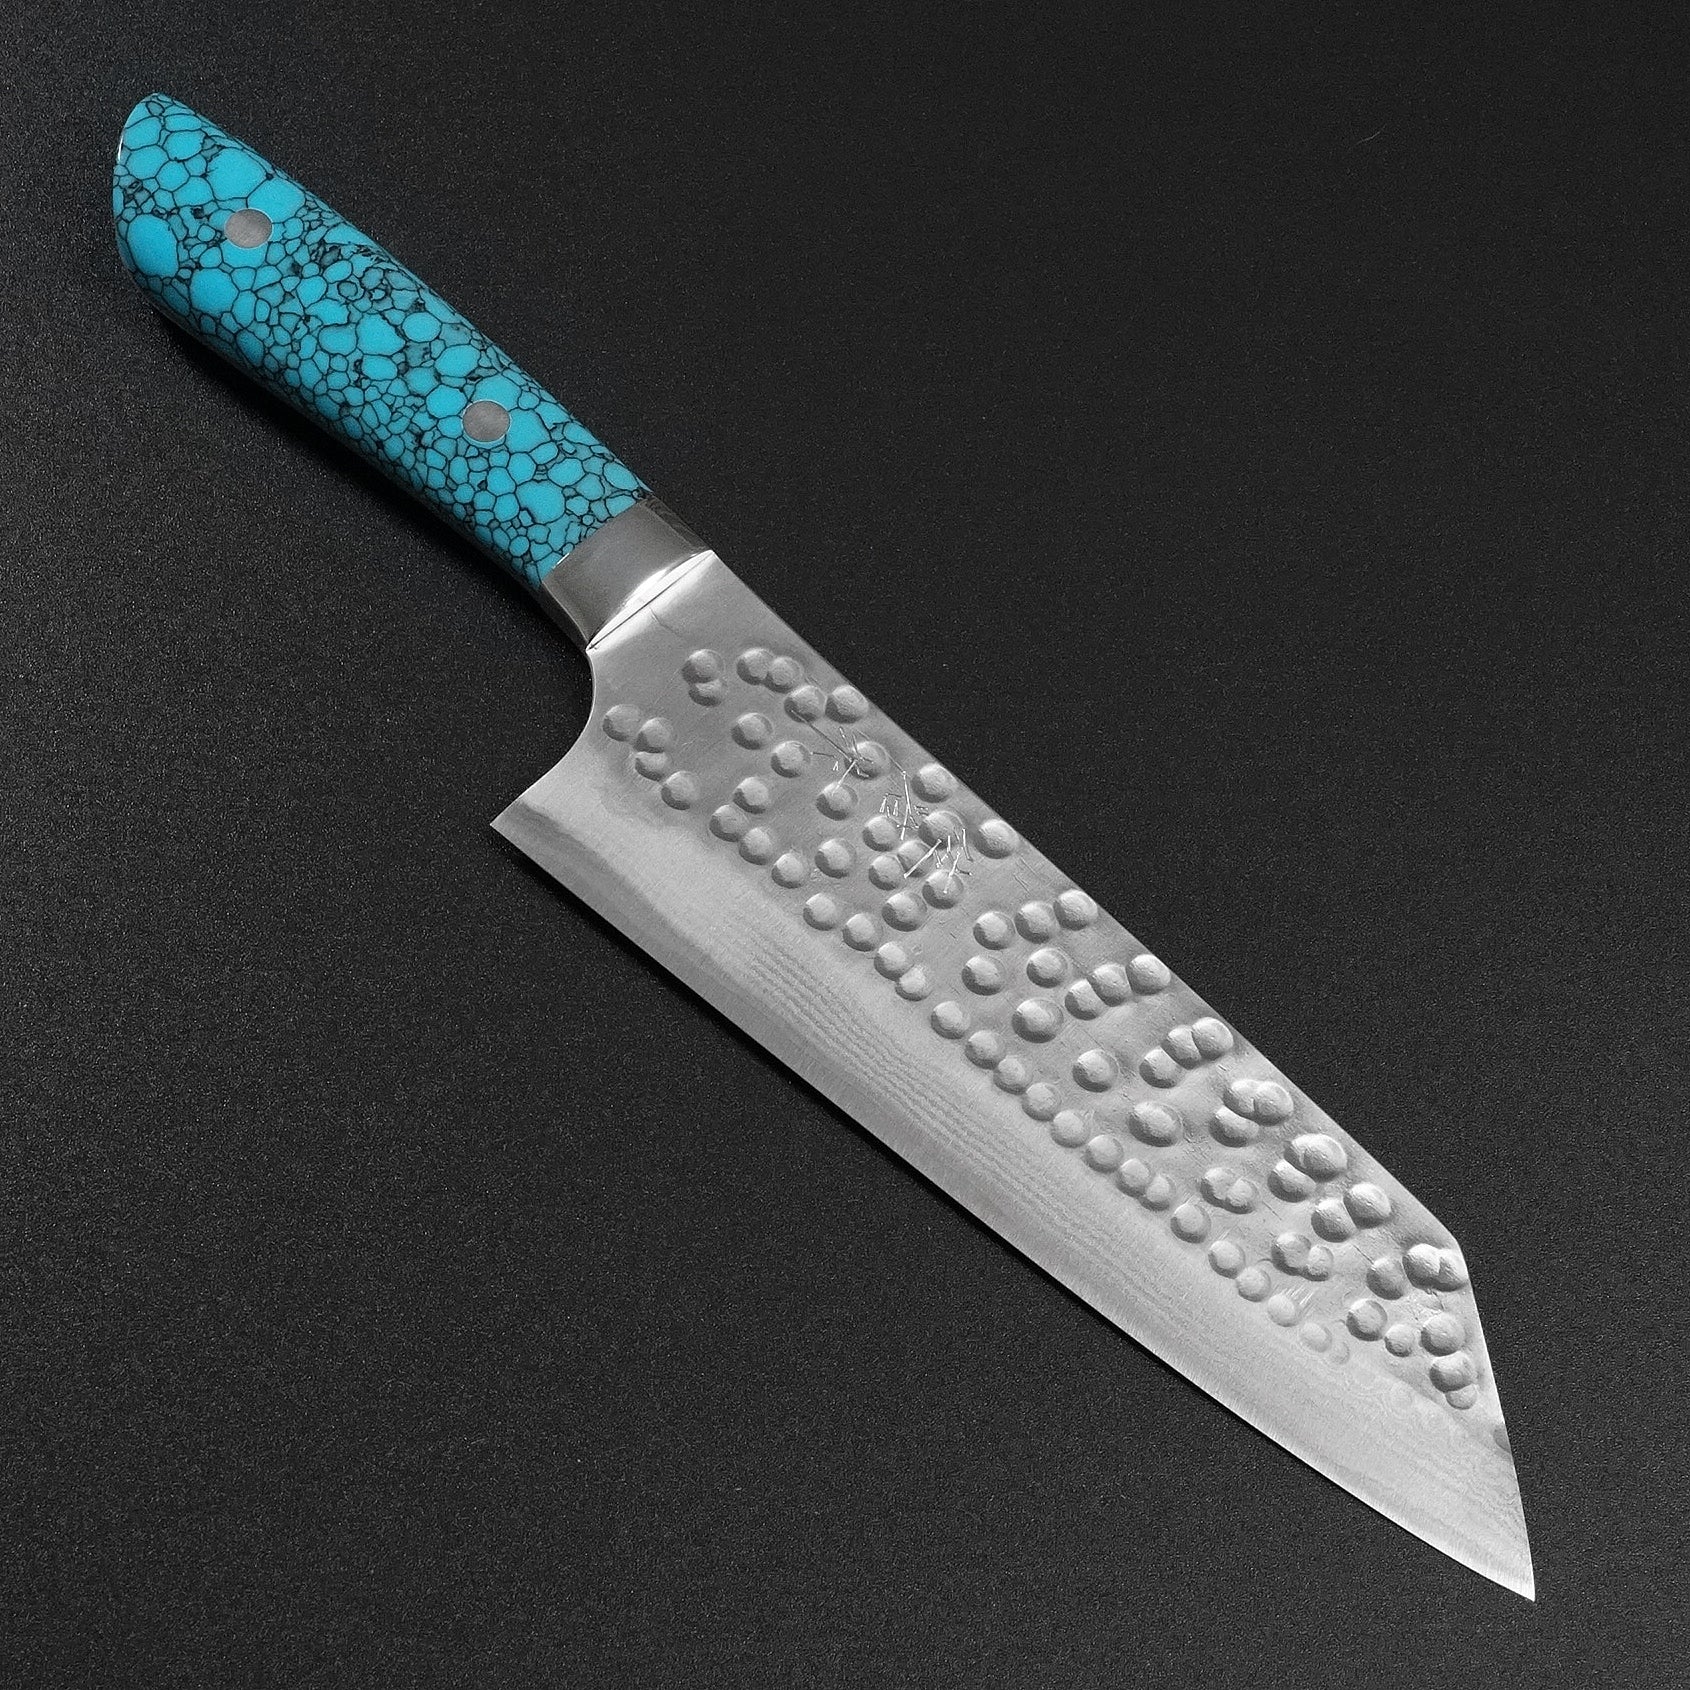 Komachi 8 Chef's Knife with Sheath, Navy